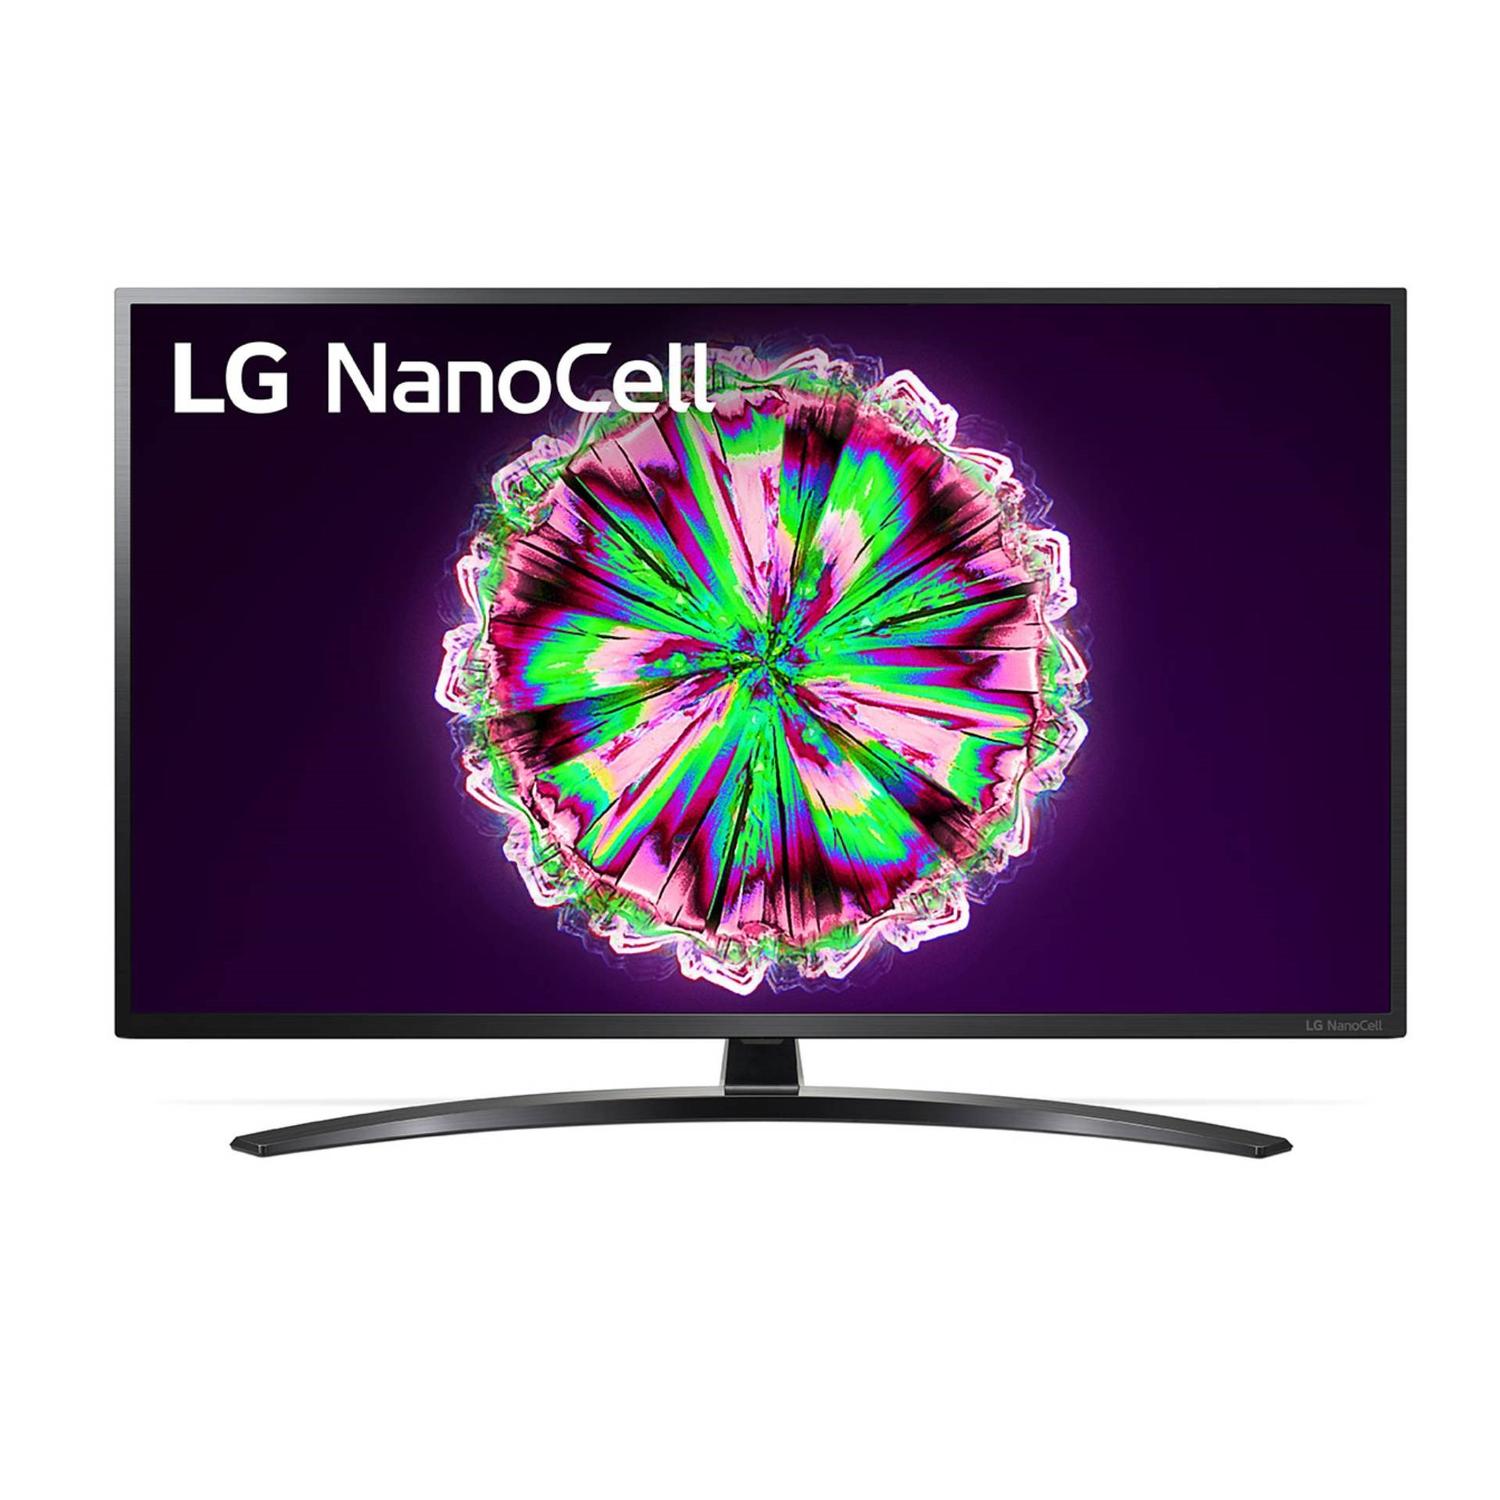 LG 65" Nanocell Ultra HD 4K Active HDR Led TV 8999 TL